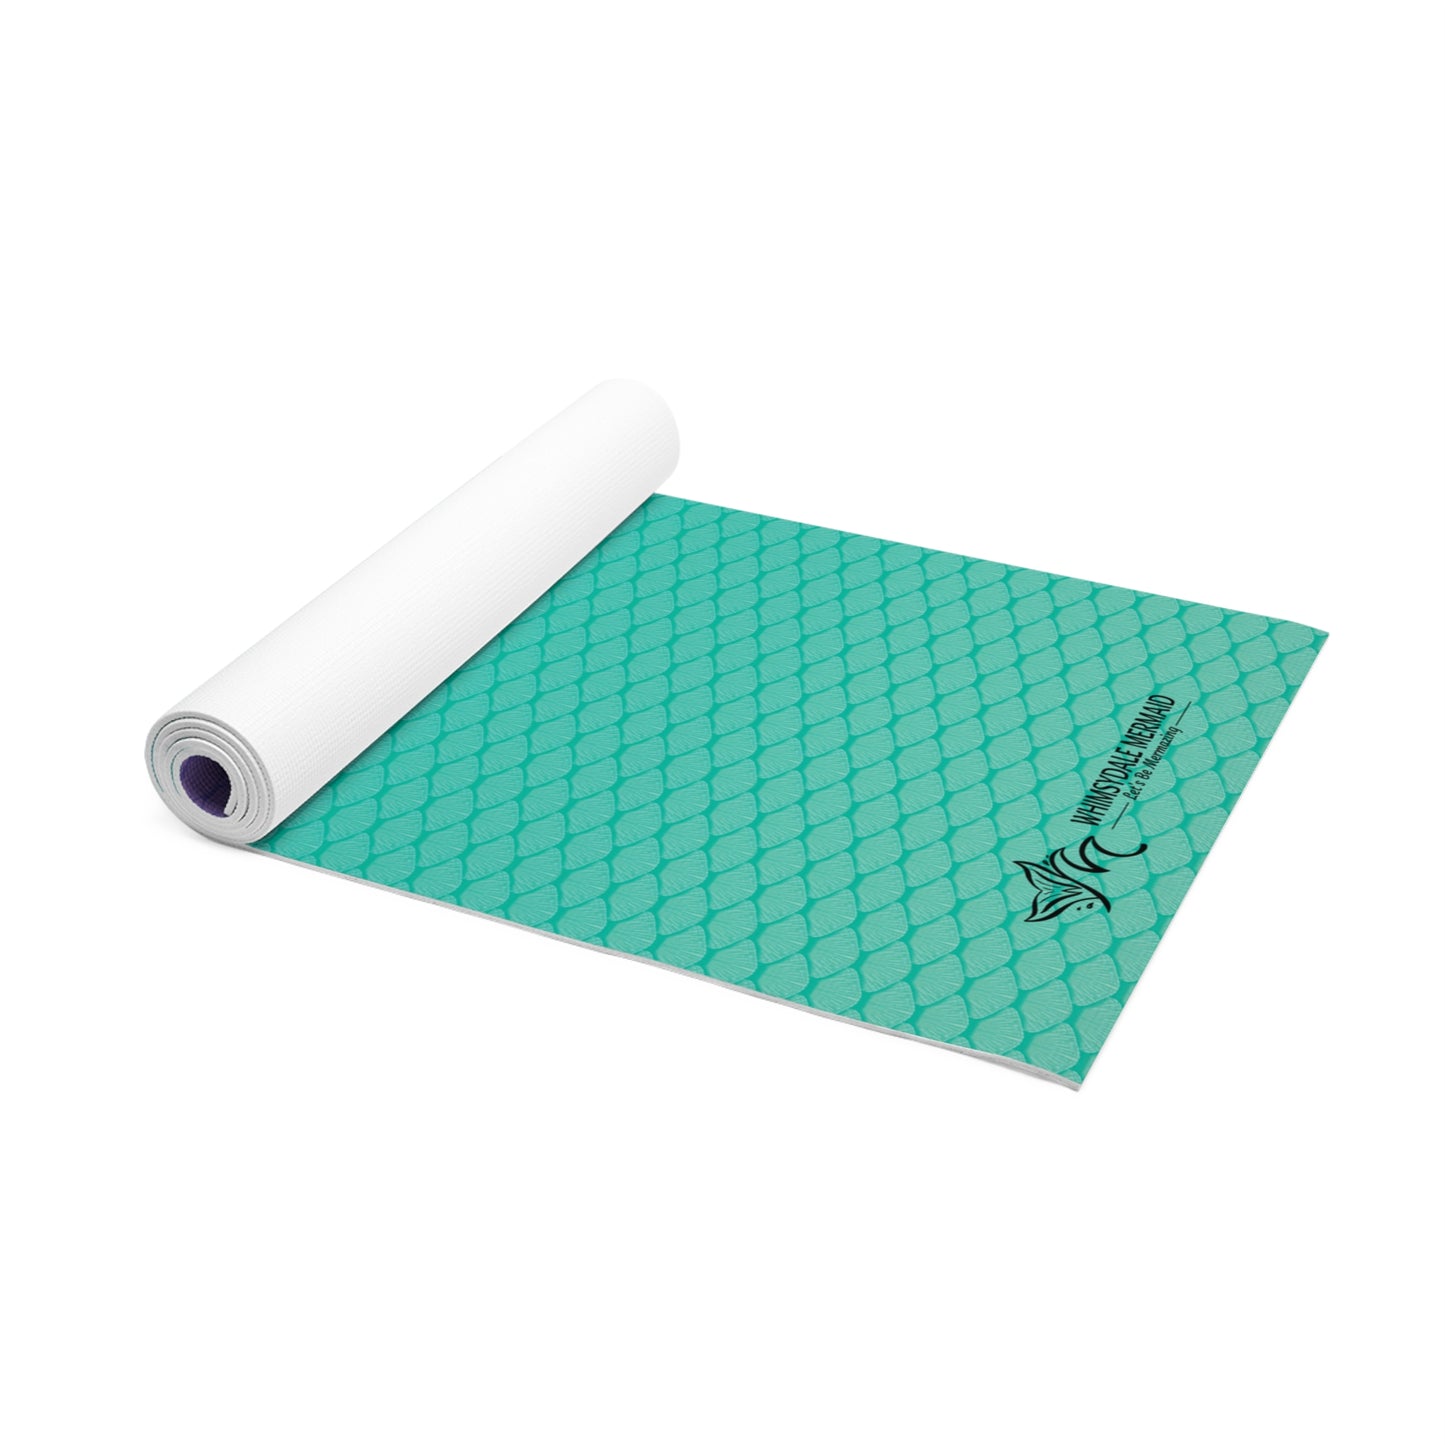 Whimsydale Design Foam Yoga Mat